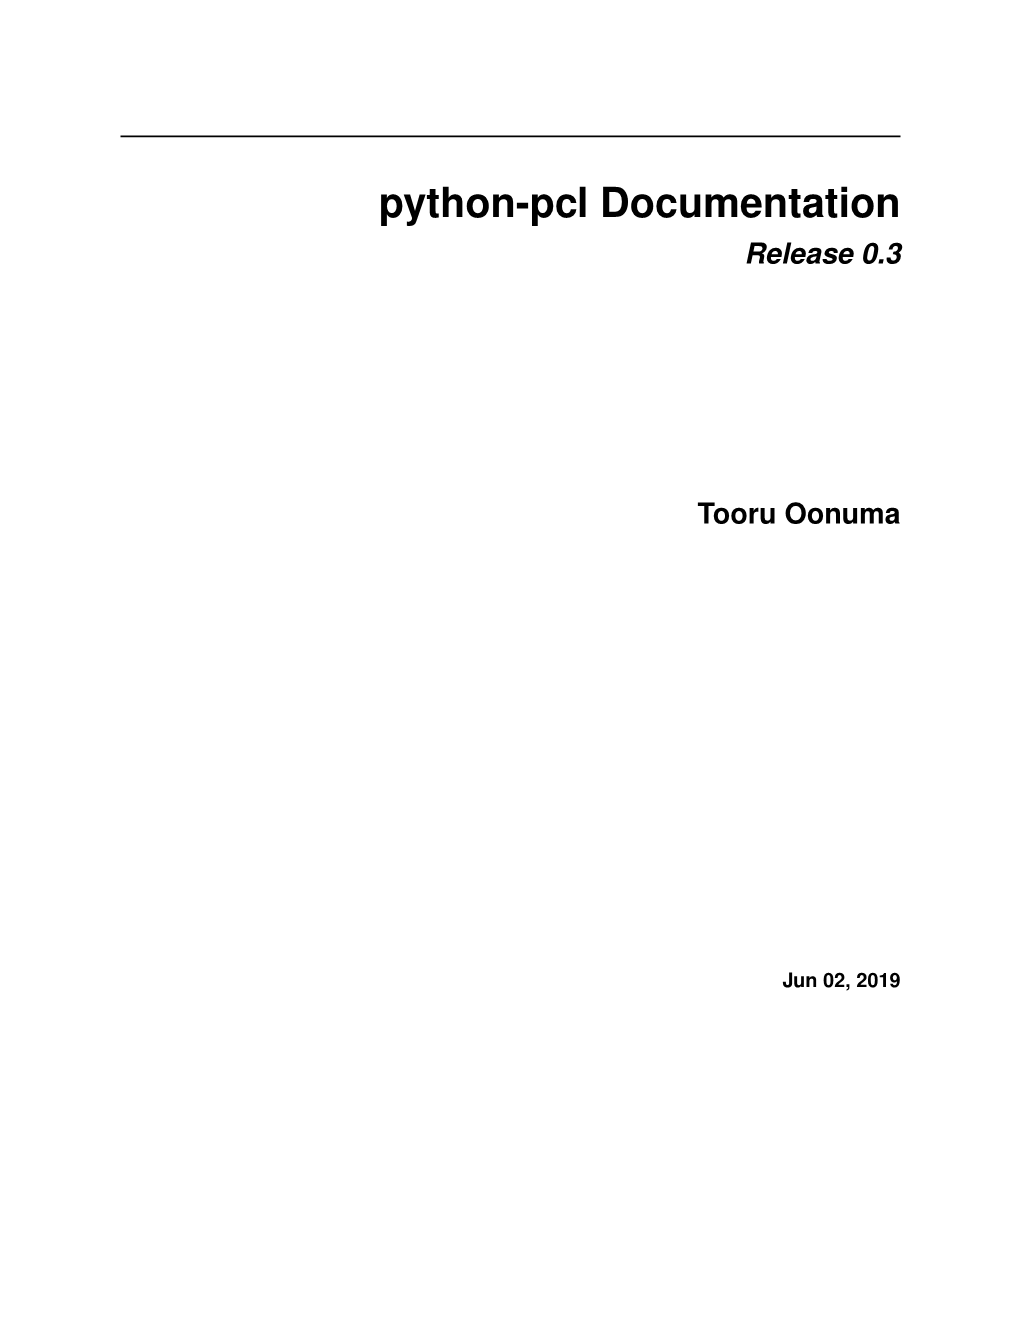 Python-Pcl Documentation Release 0.3